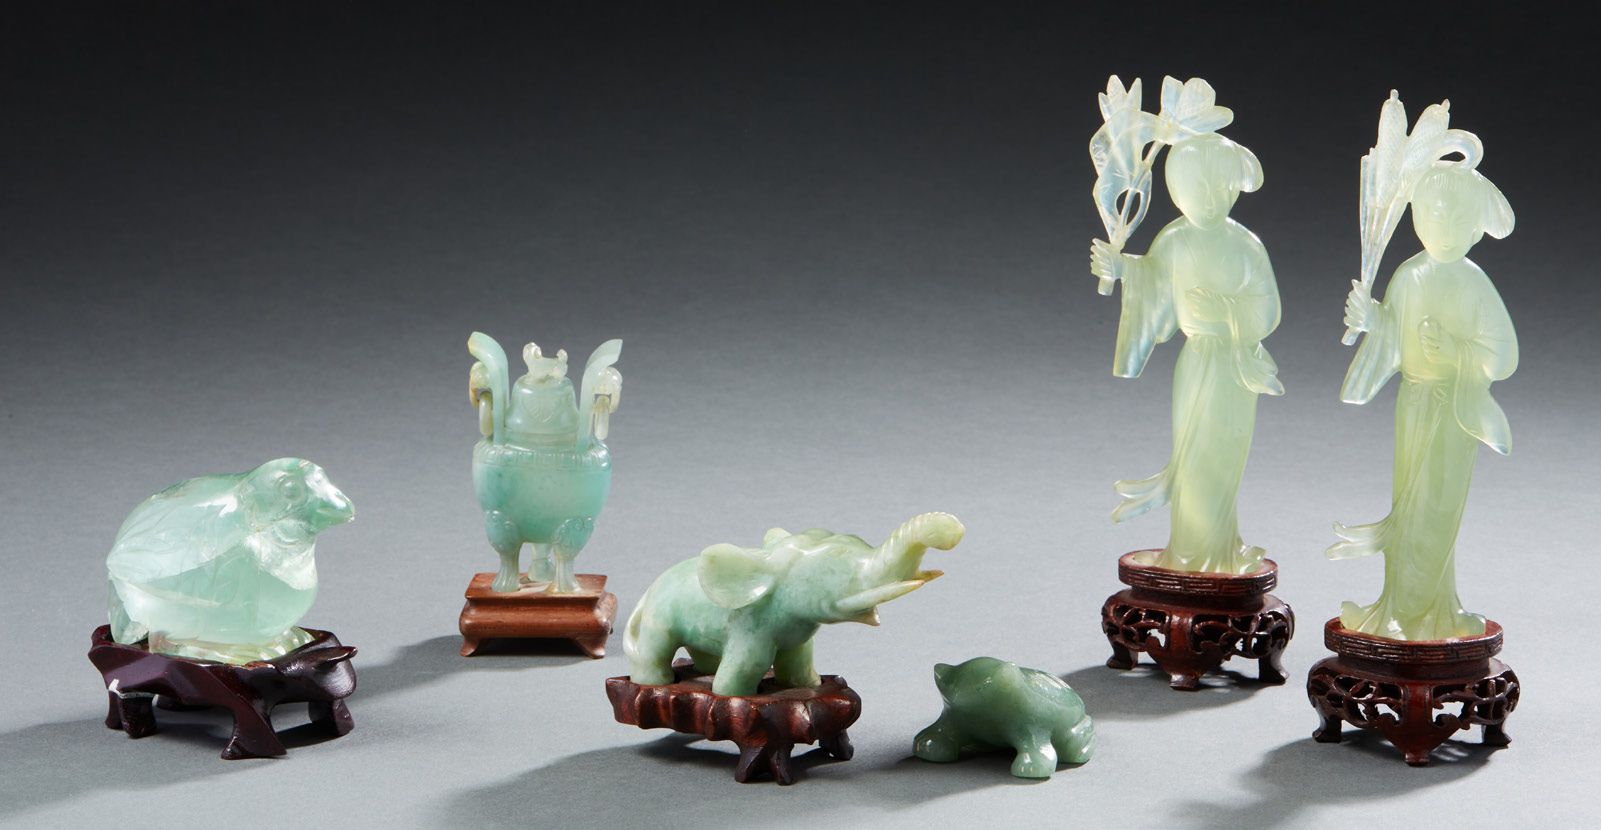 CHINE 套装包括一只大象，一只青蛙和一个绿色雕刻玉石的有盖花瓶。附有两个玉石雕刻的小雕像和一只绿色的鸟。